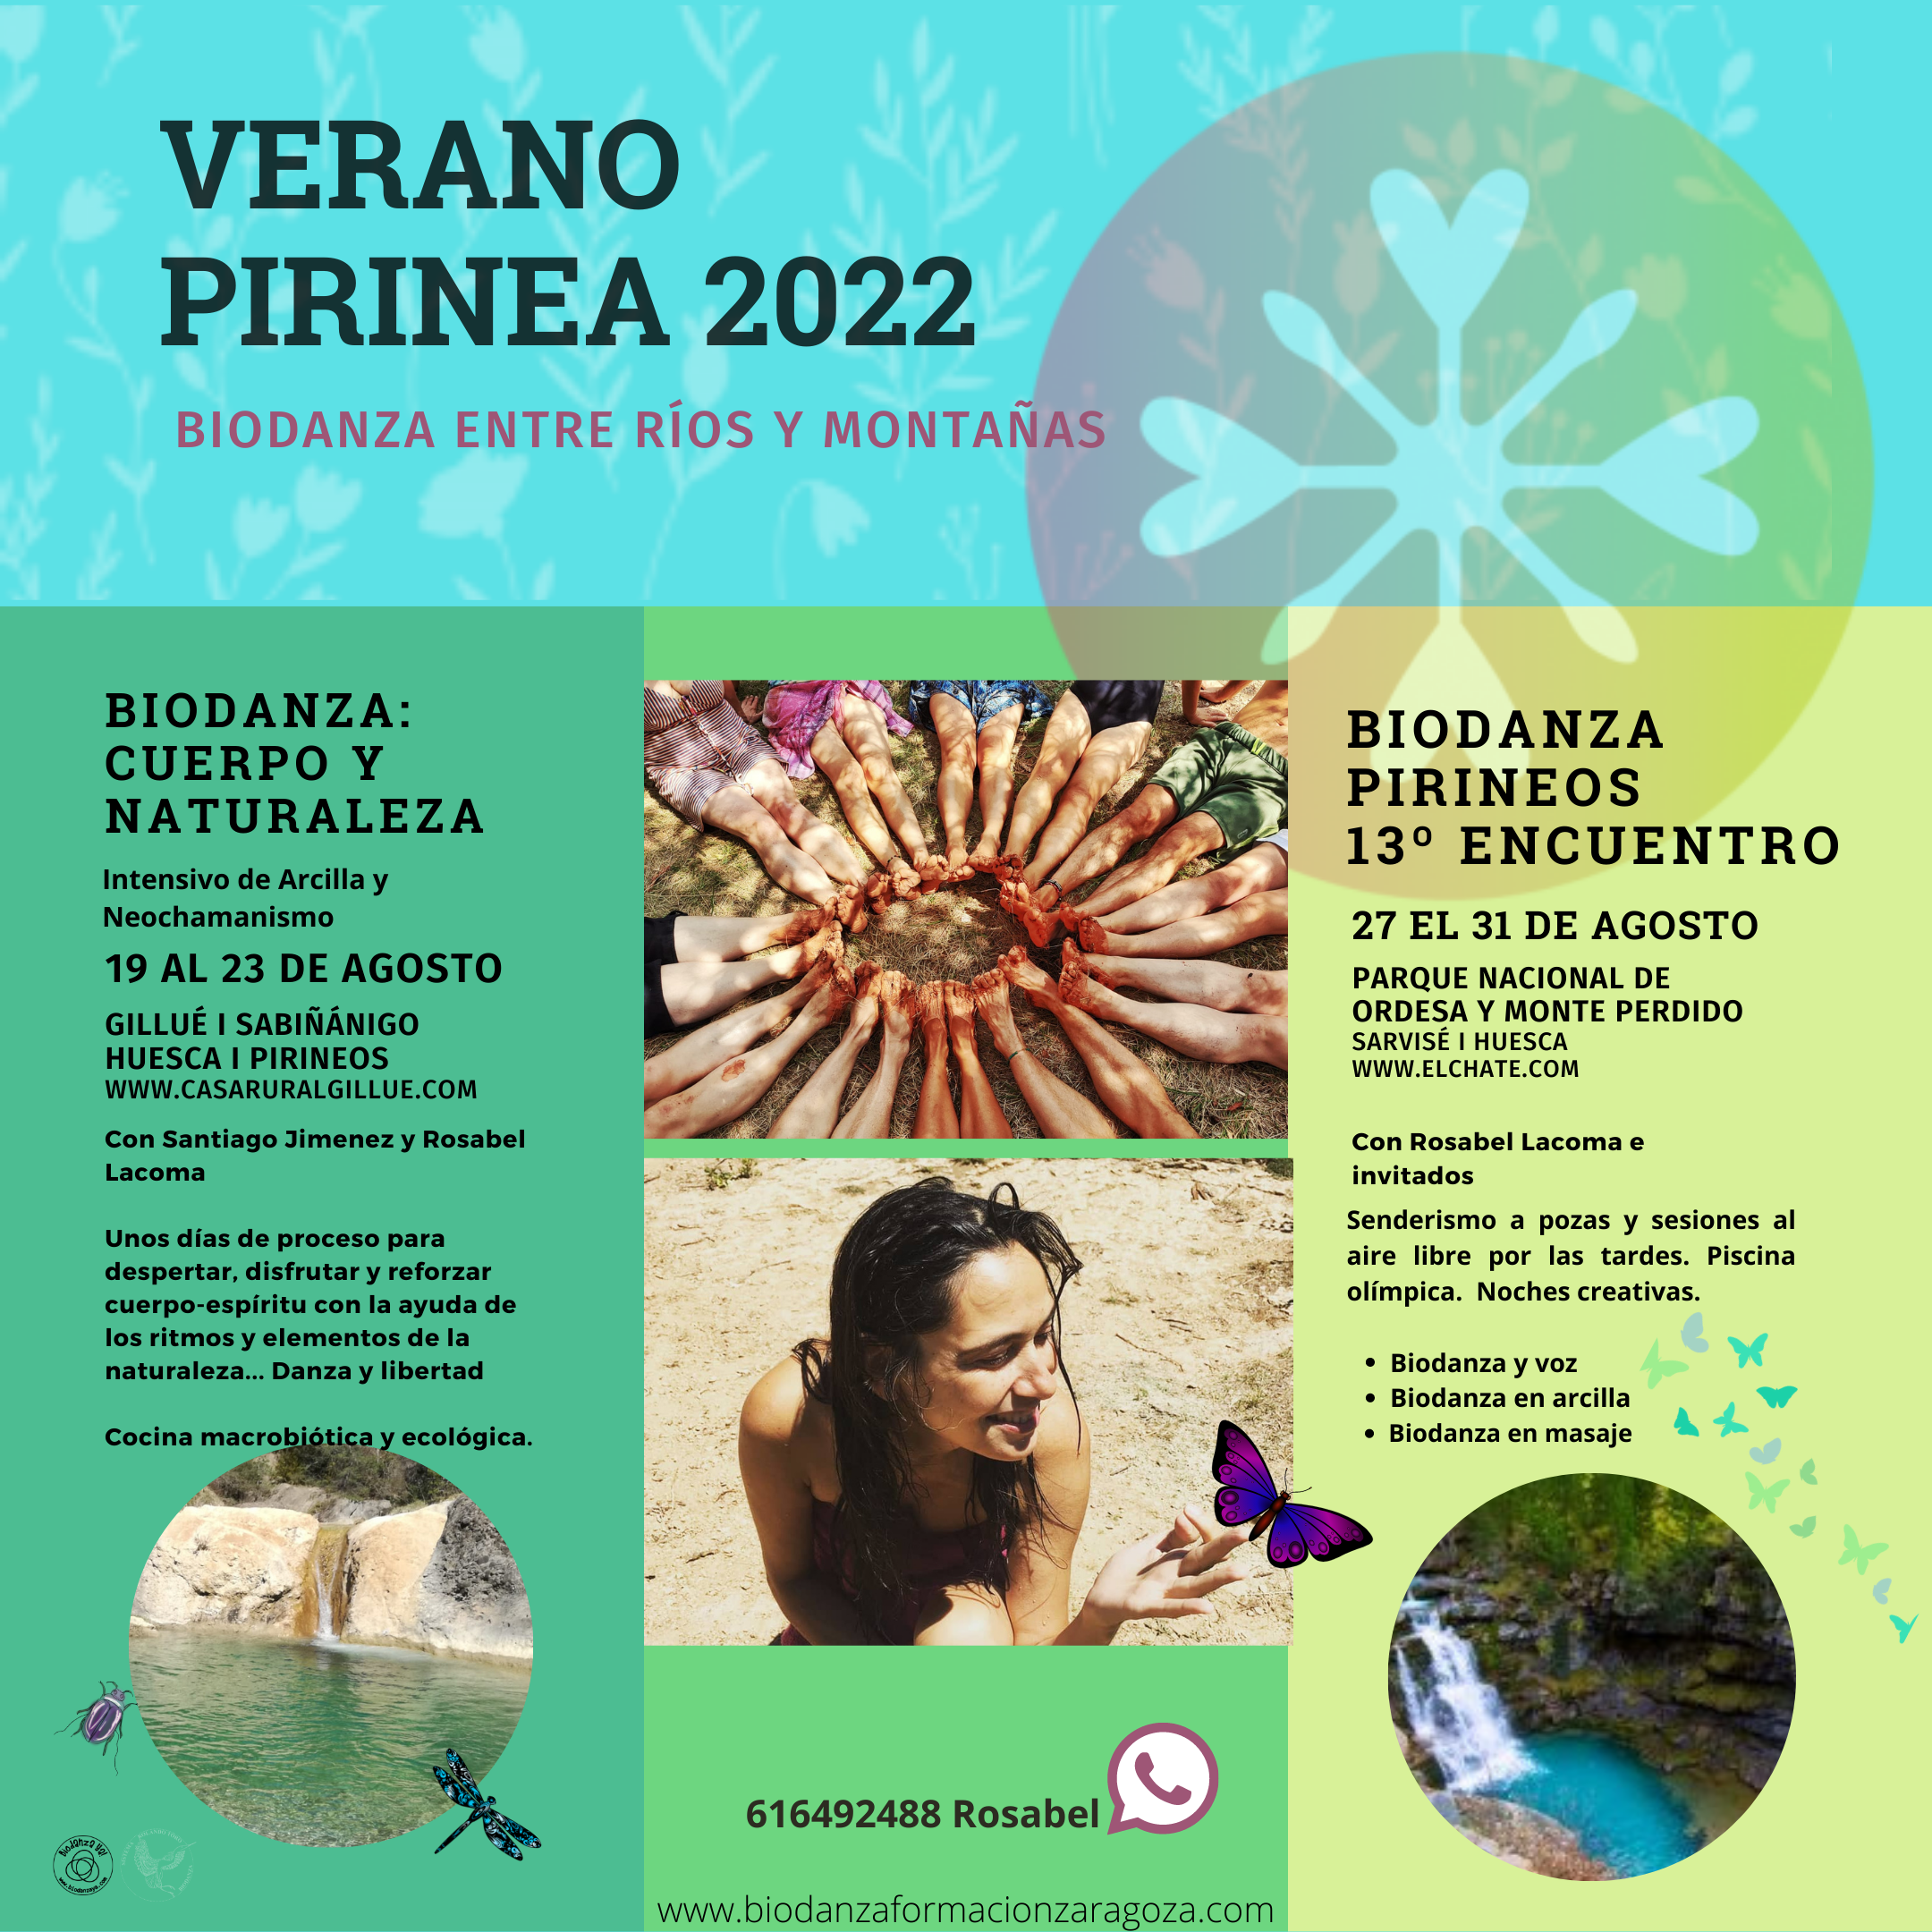 Biodanza Pirineos 2022. Biodanza y Neo-chamanismo